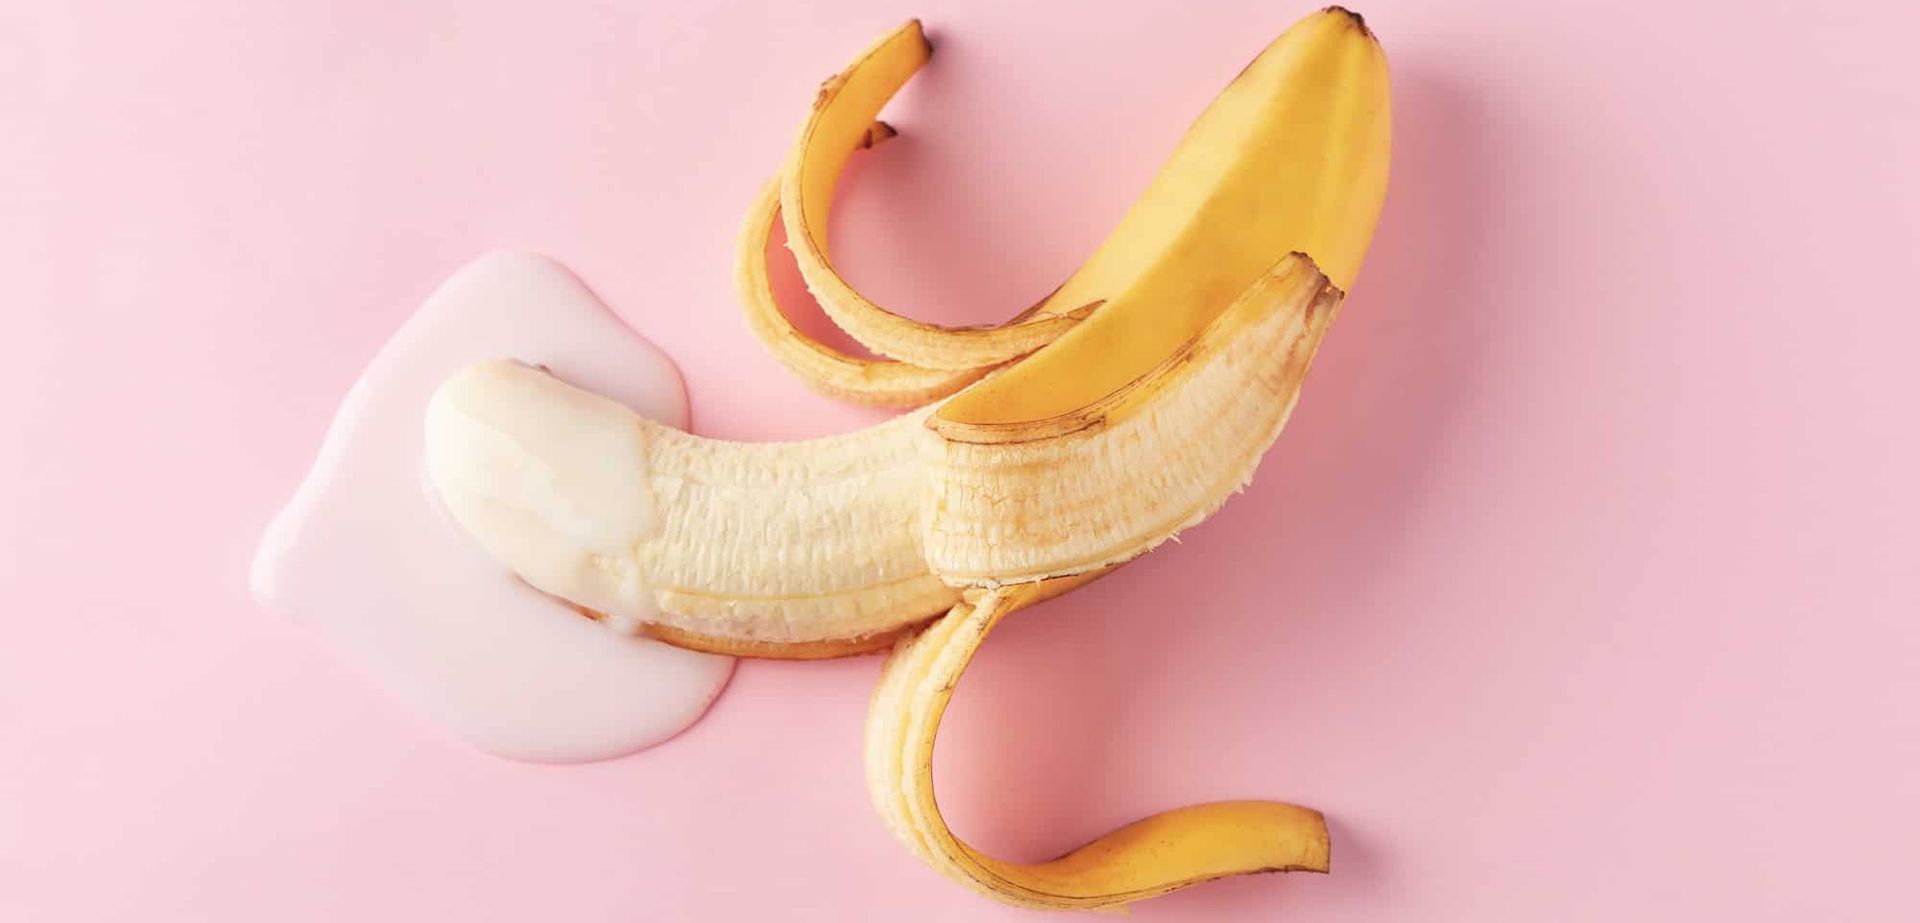 Banana with fake cum.